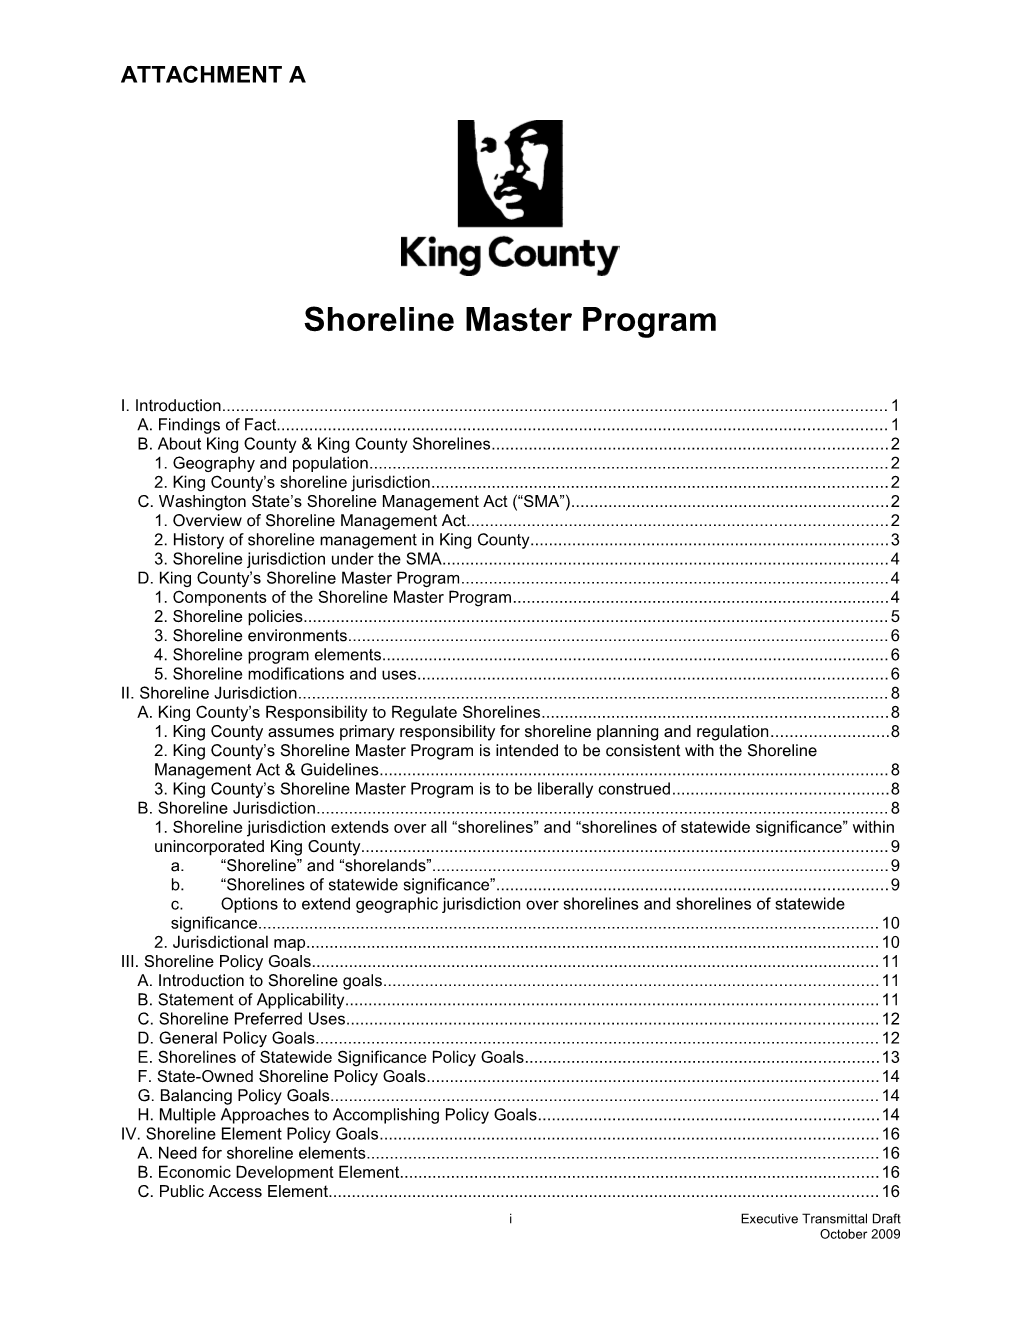 King County Shoreline Master Program